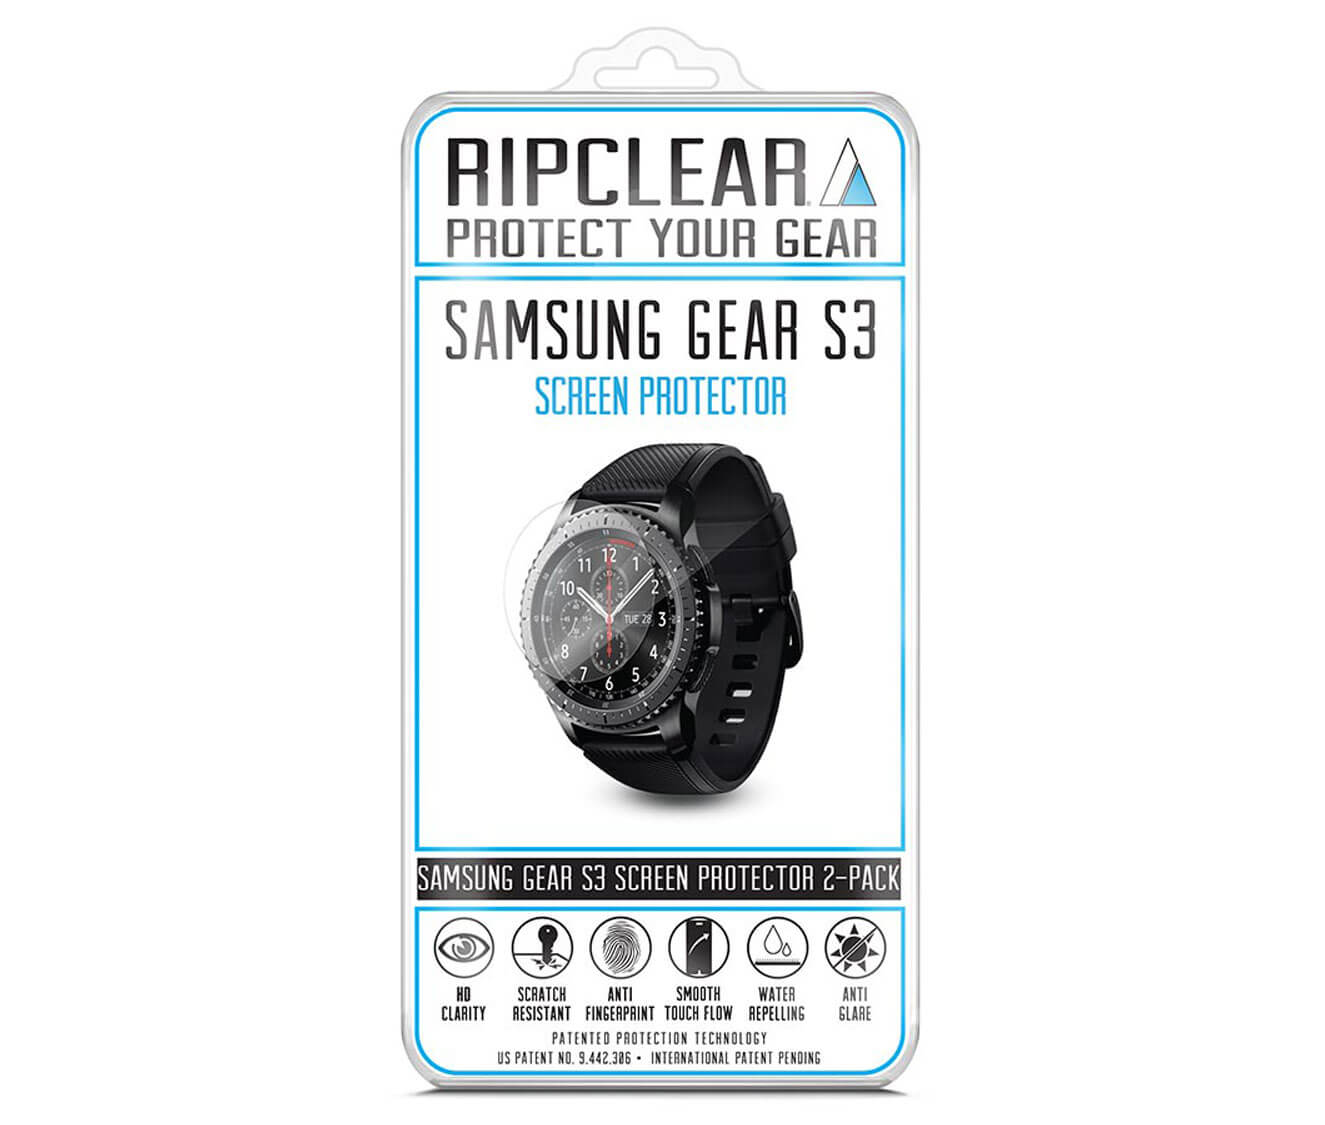 Ripclear Samsung Gear S3 Screen Protector